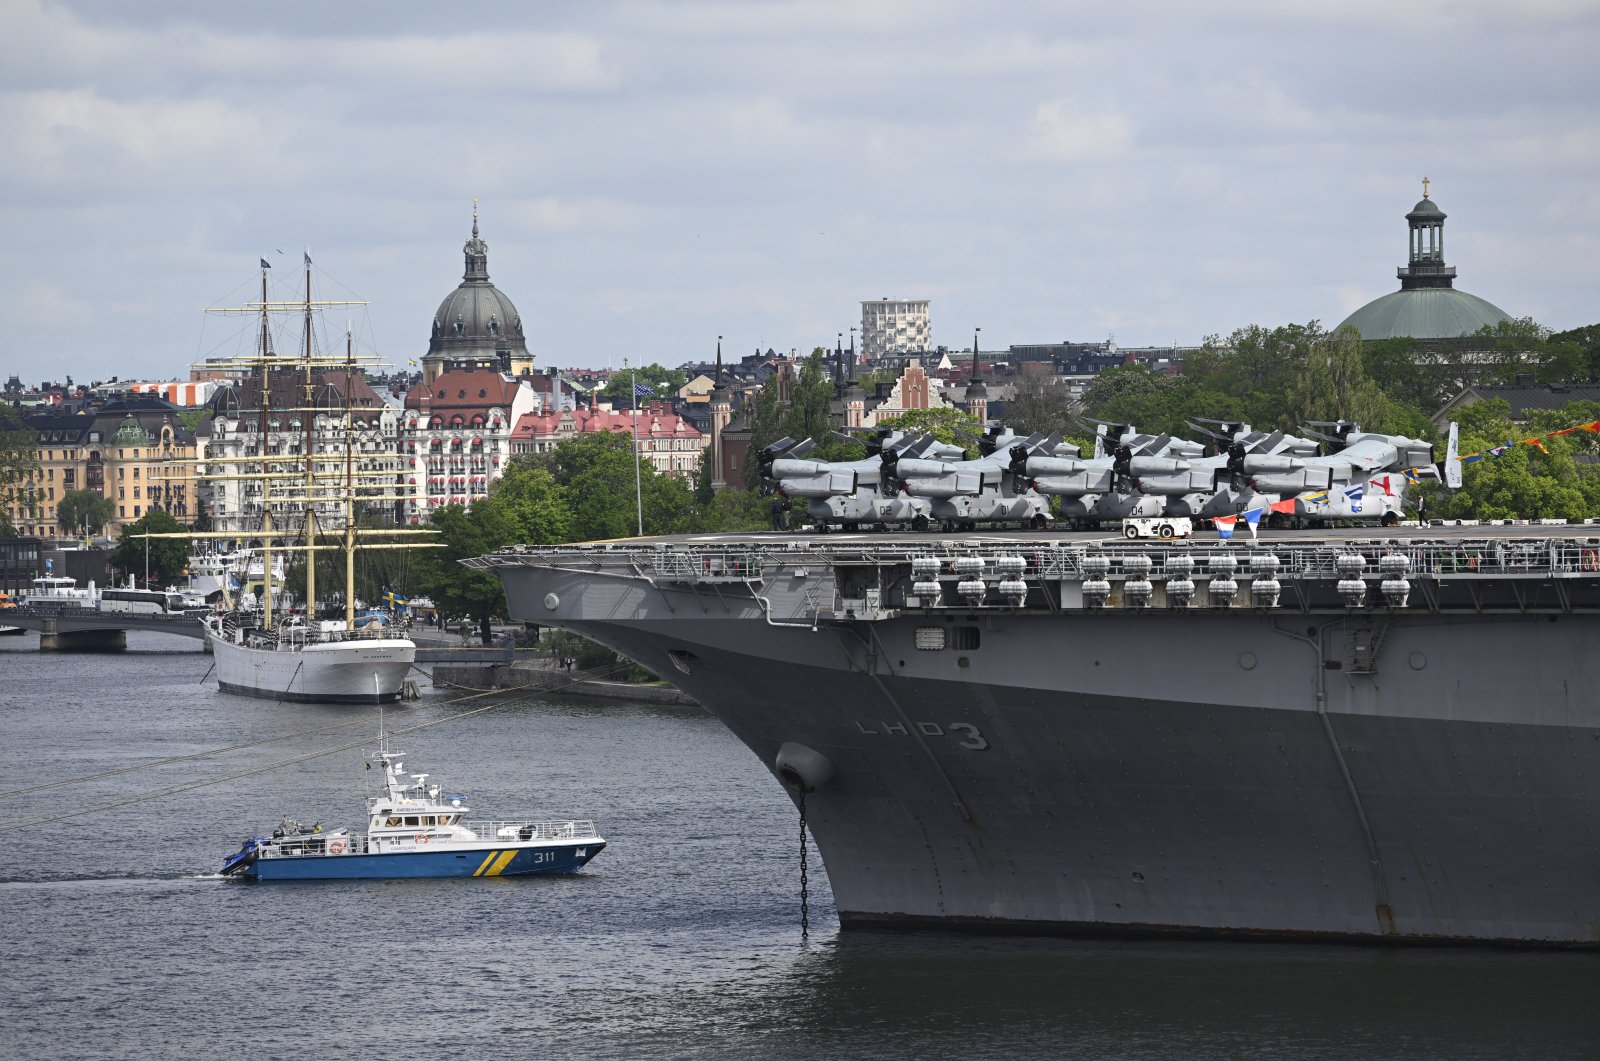 The U.S. amphibious assault ship USS Kearsarge is seen in central Stockholm, Sweden, June 3, 2022. (EPA Photo)